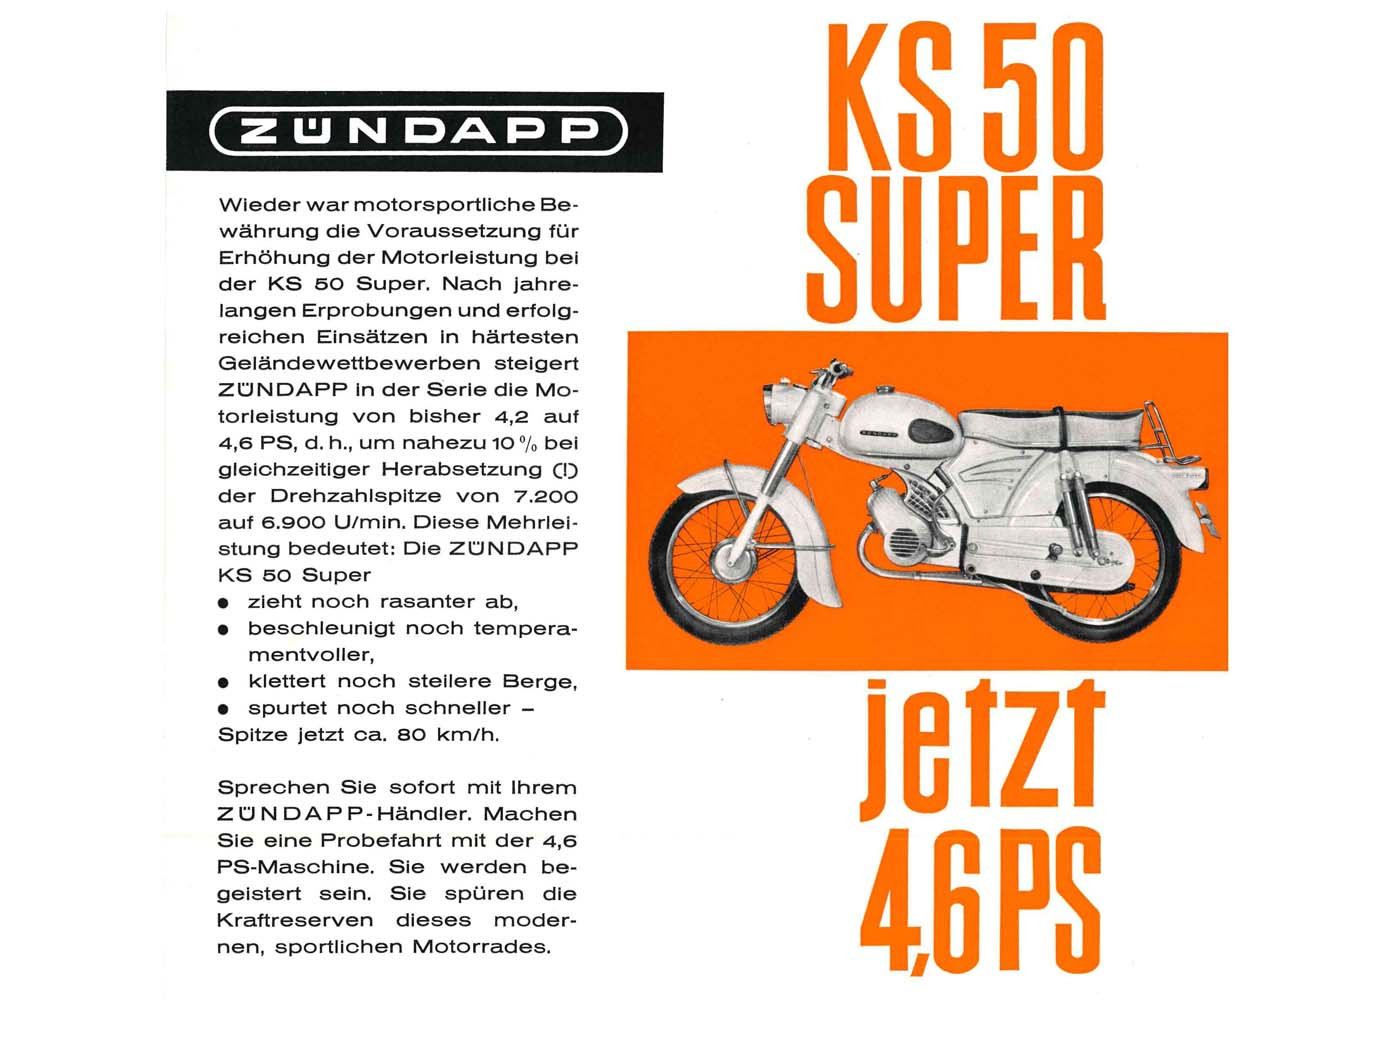 Zündapp KS50 Super 4,6 PS Flyer/Prospectus